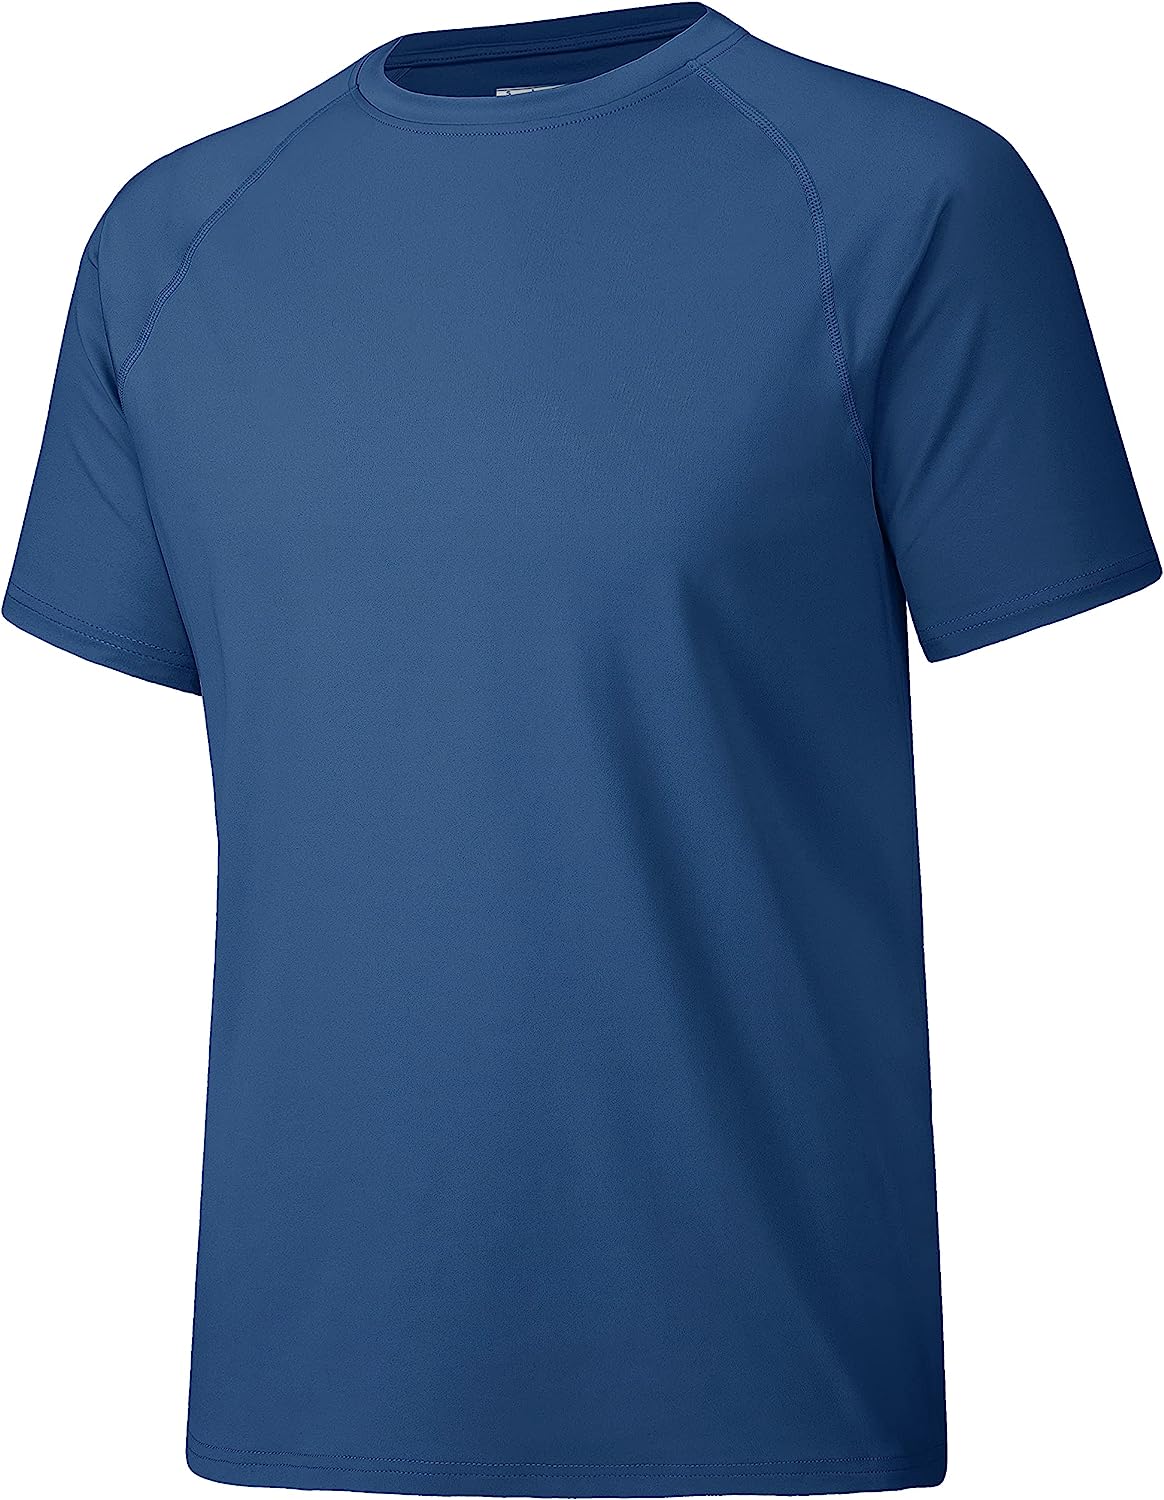 MAGCOMSEN Men's SPF Shirts Short Sleeve Shirts UPF 50+ Quick Dry Rashguard  Workout Fishing Running Athletic T-Shirts(Orange) - Magcomsen